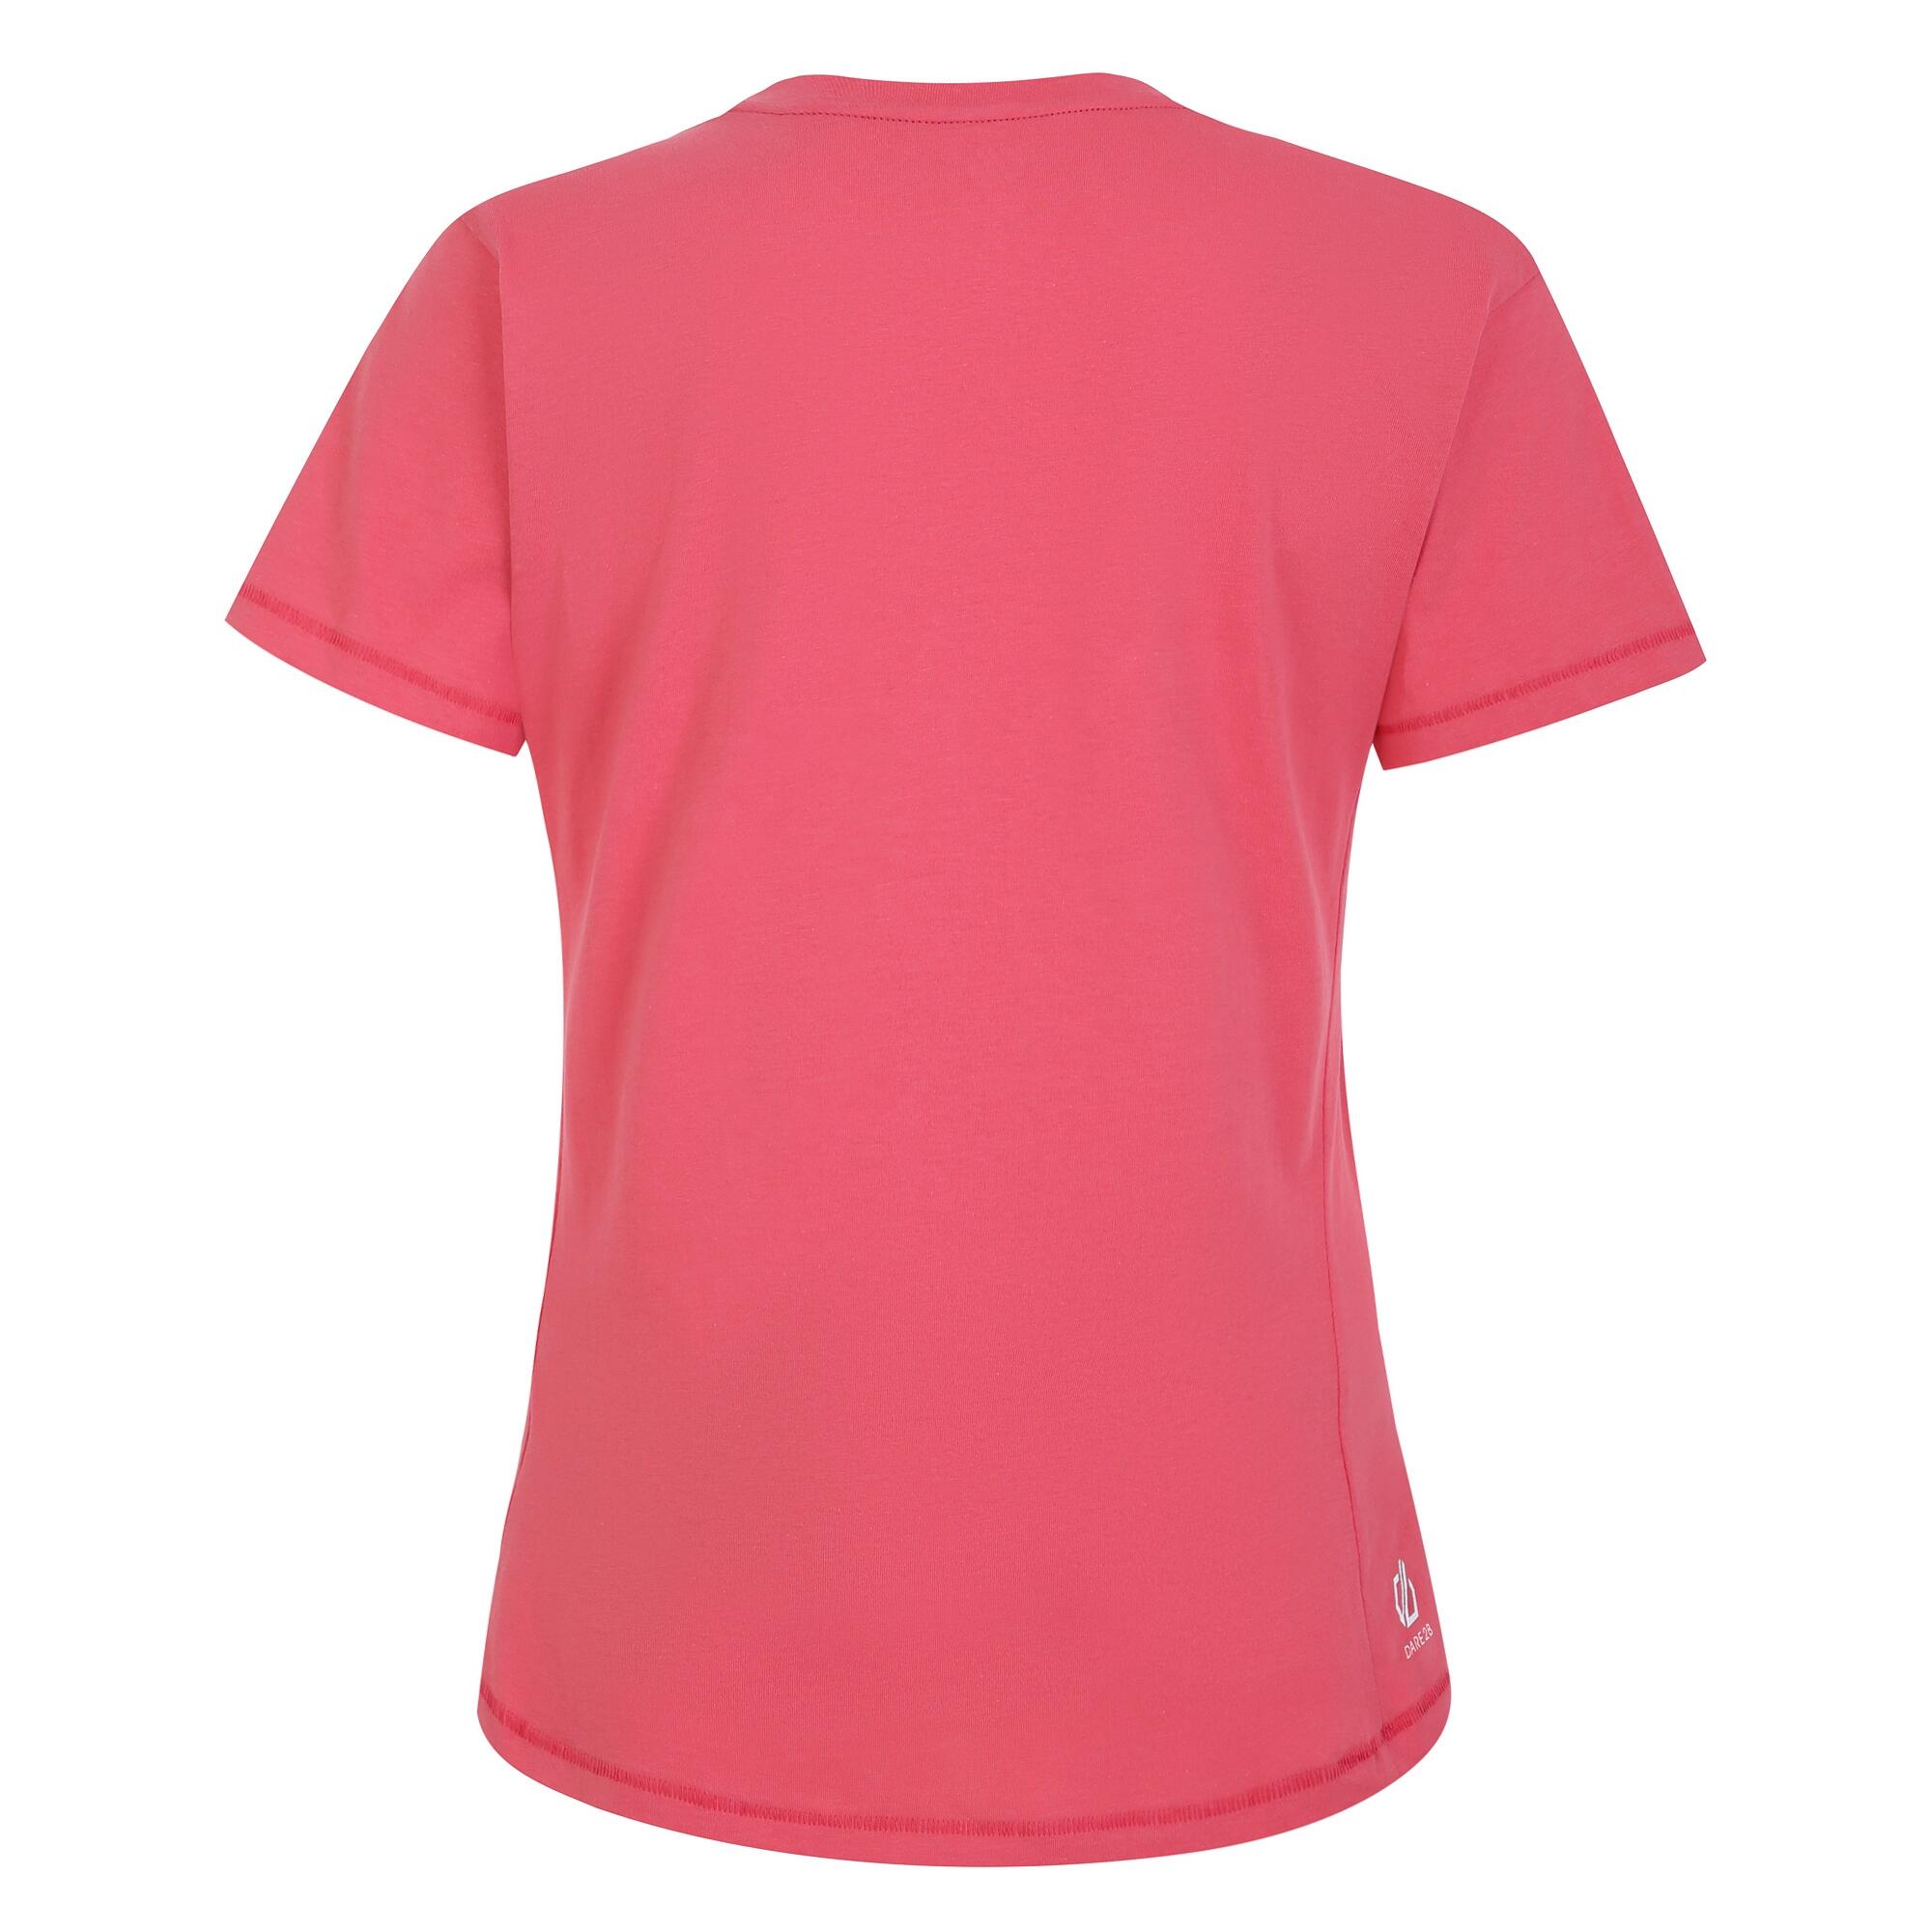 Womens/Ladies Tranquility II Heart TShirt (Sorbet Pink) 2/4